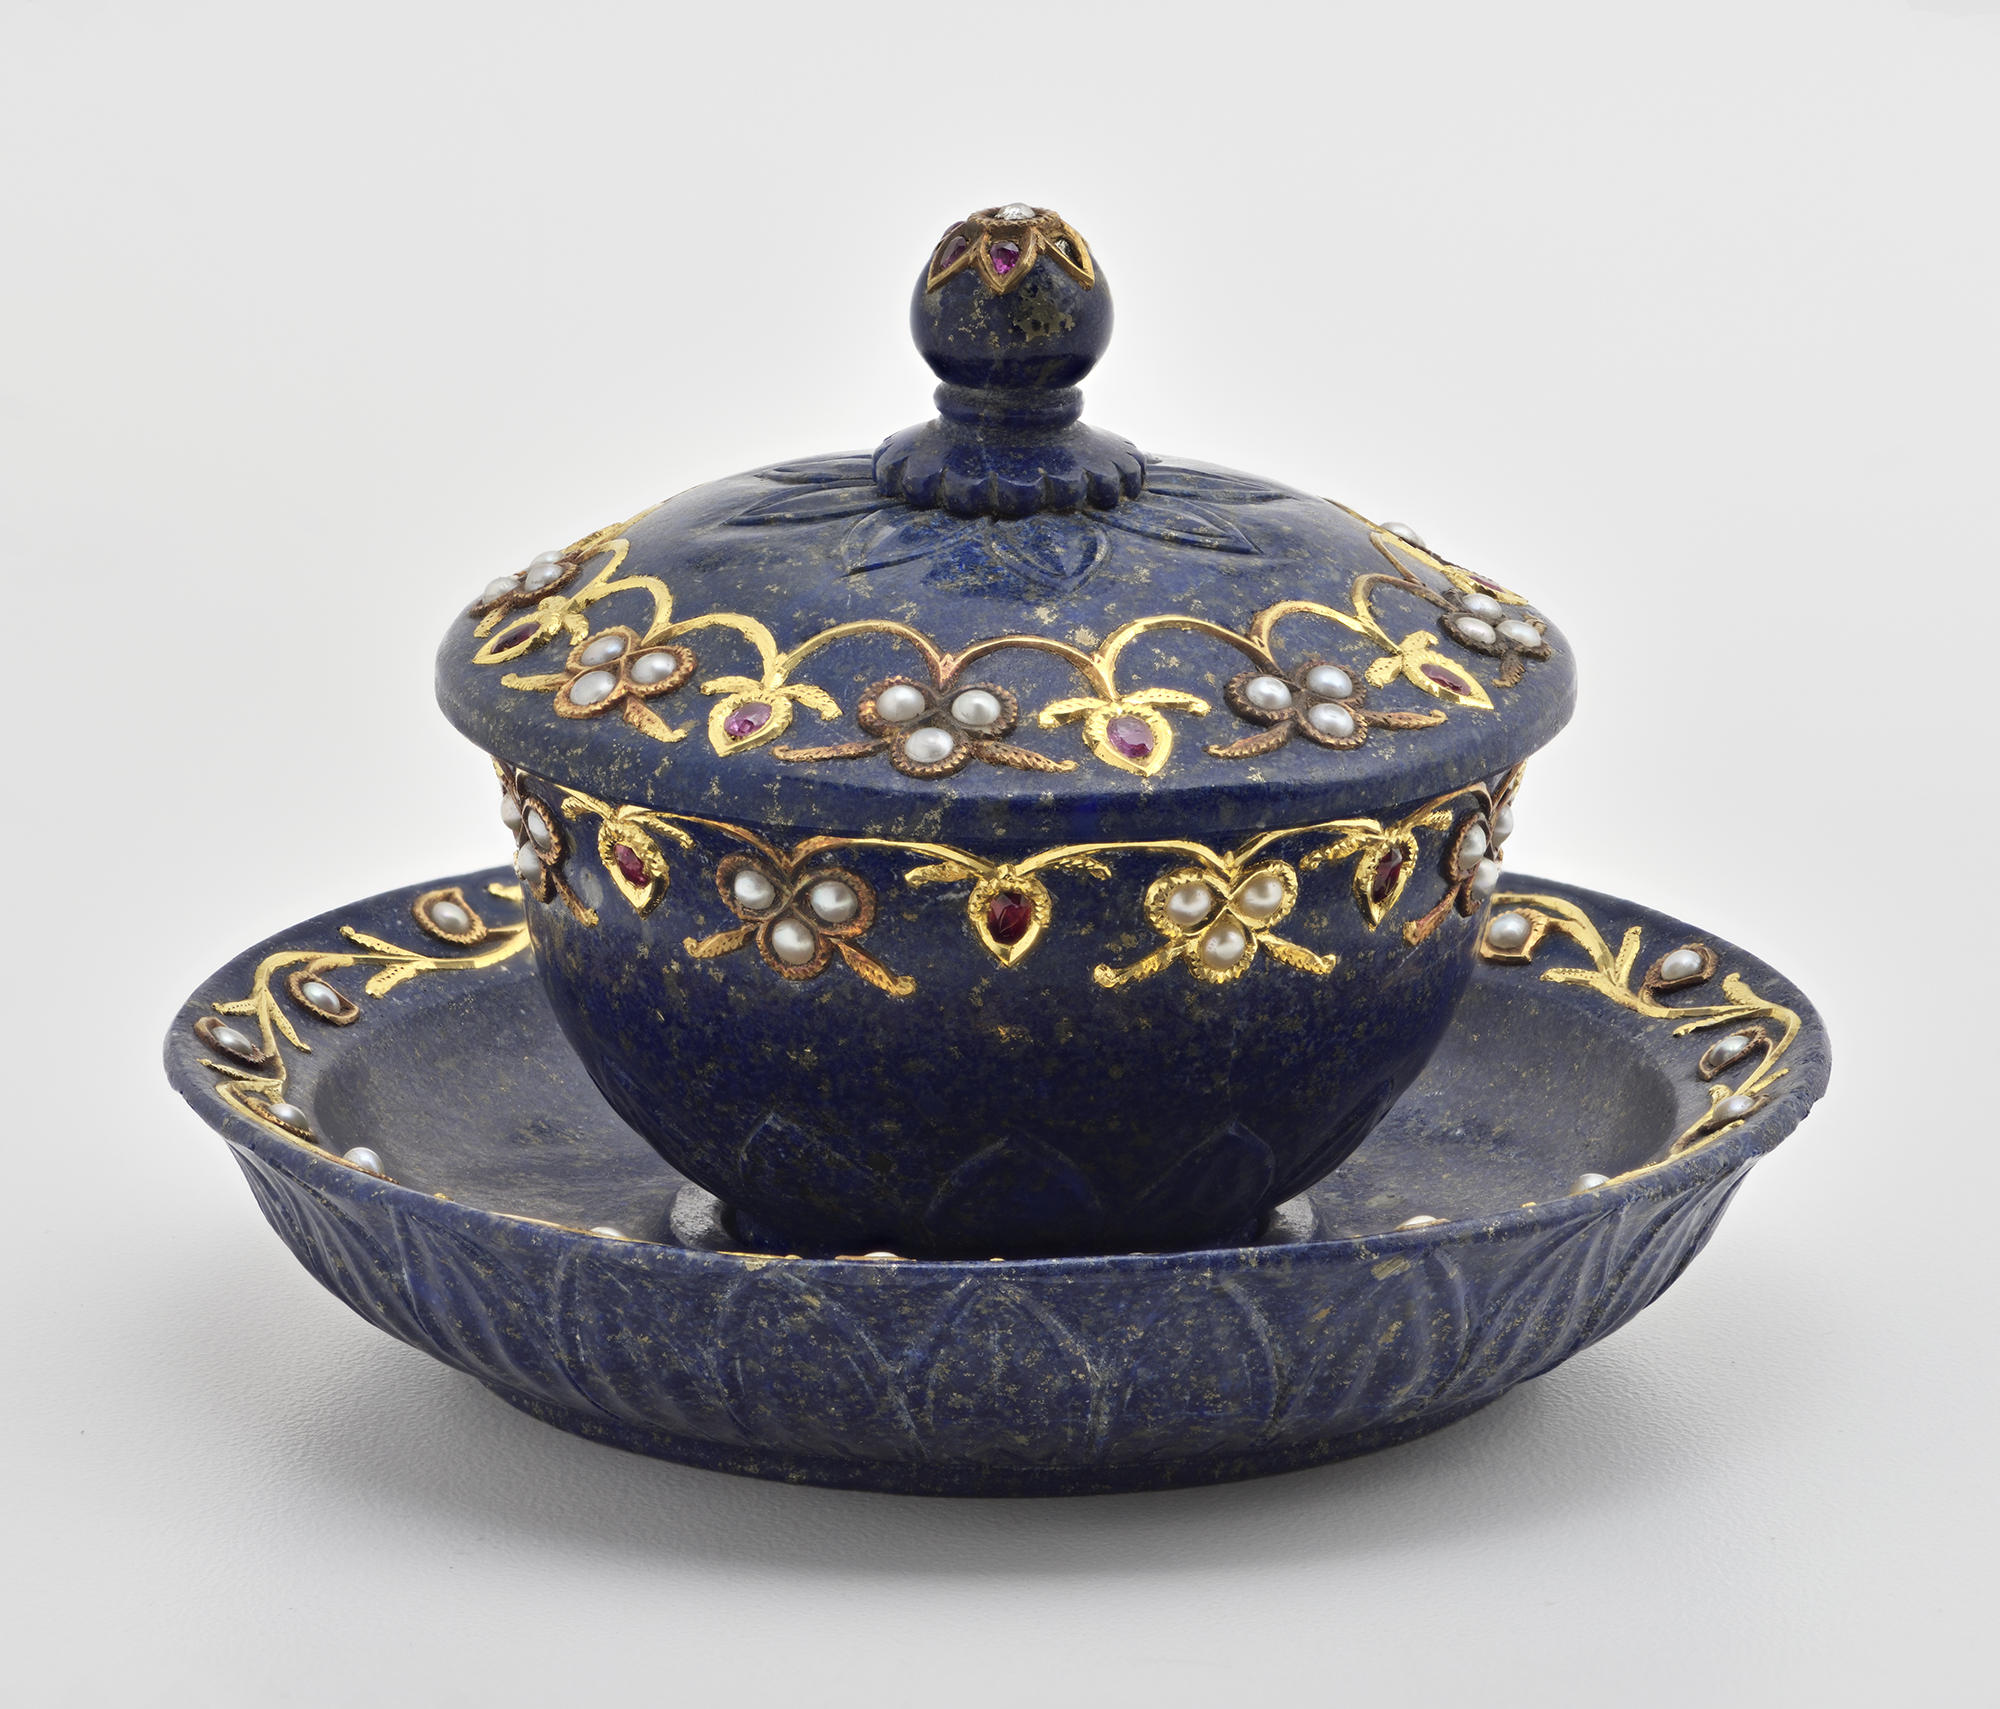 A blue teacup and matching saucer.